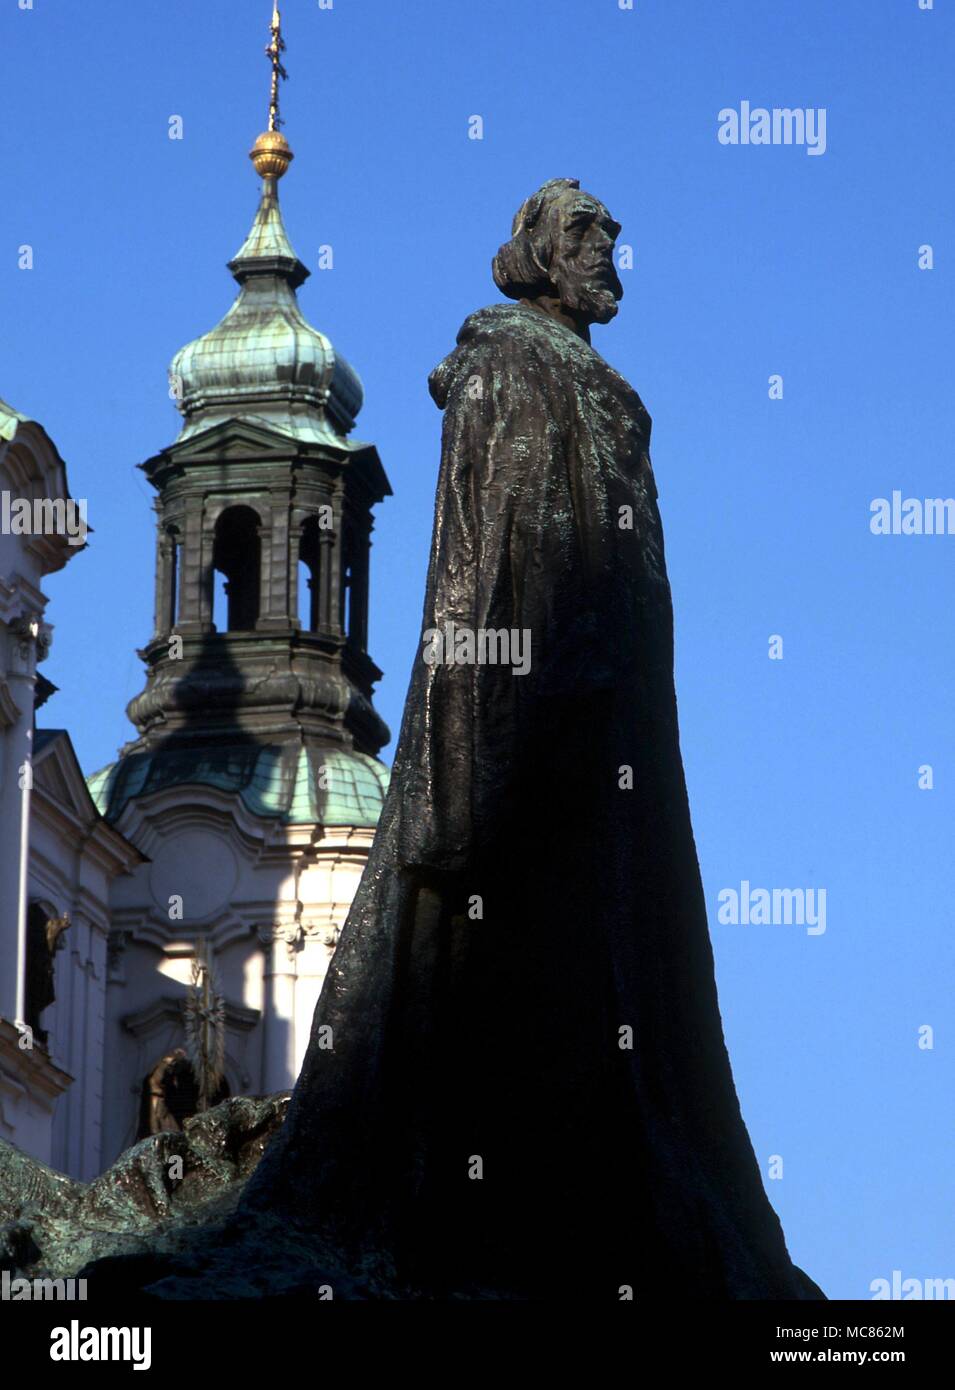 CHRISTIAN - John Huss estatua del reformador de Bohemia, Juan Huss (1369-1415), líder de los Husitas del siglo xv Foto de stock